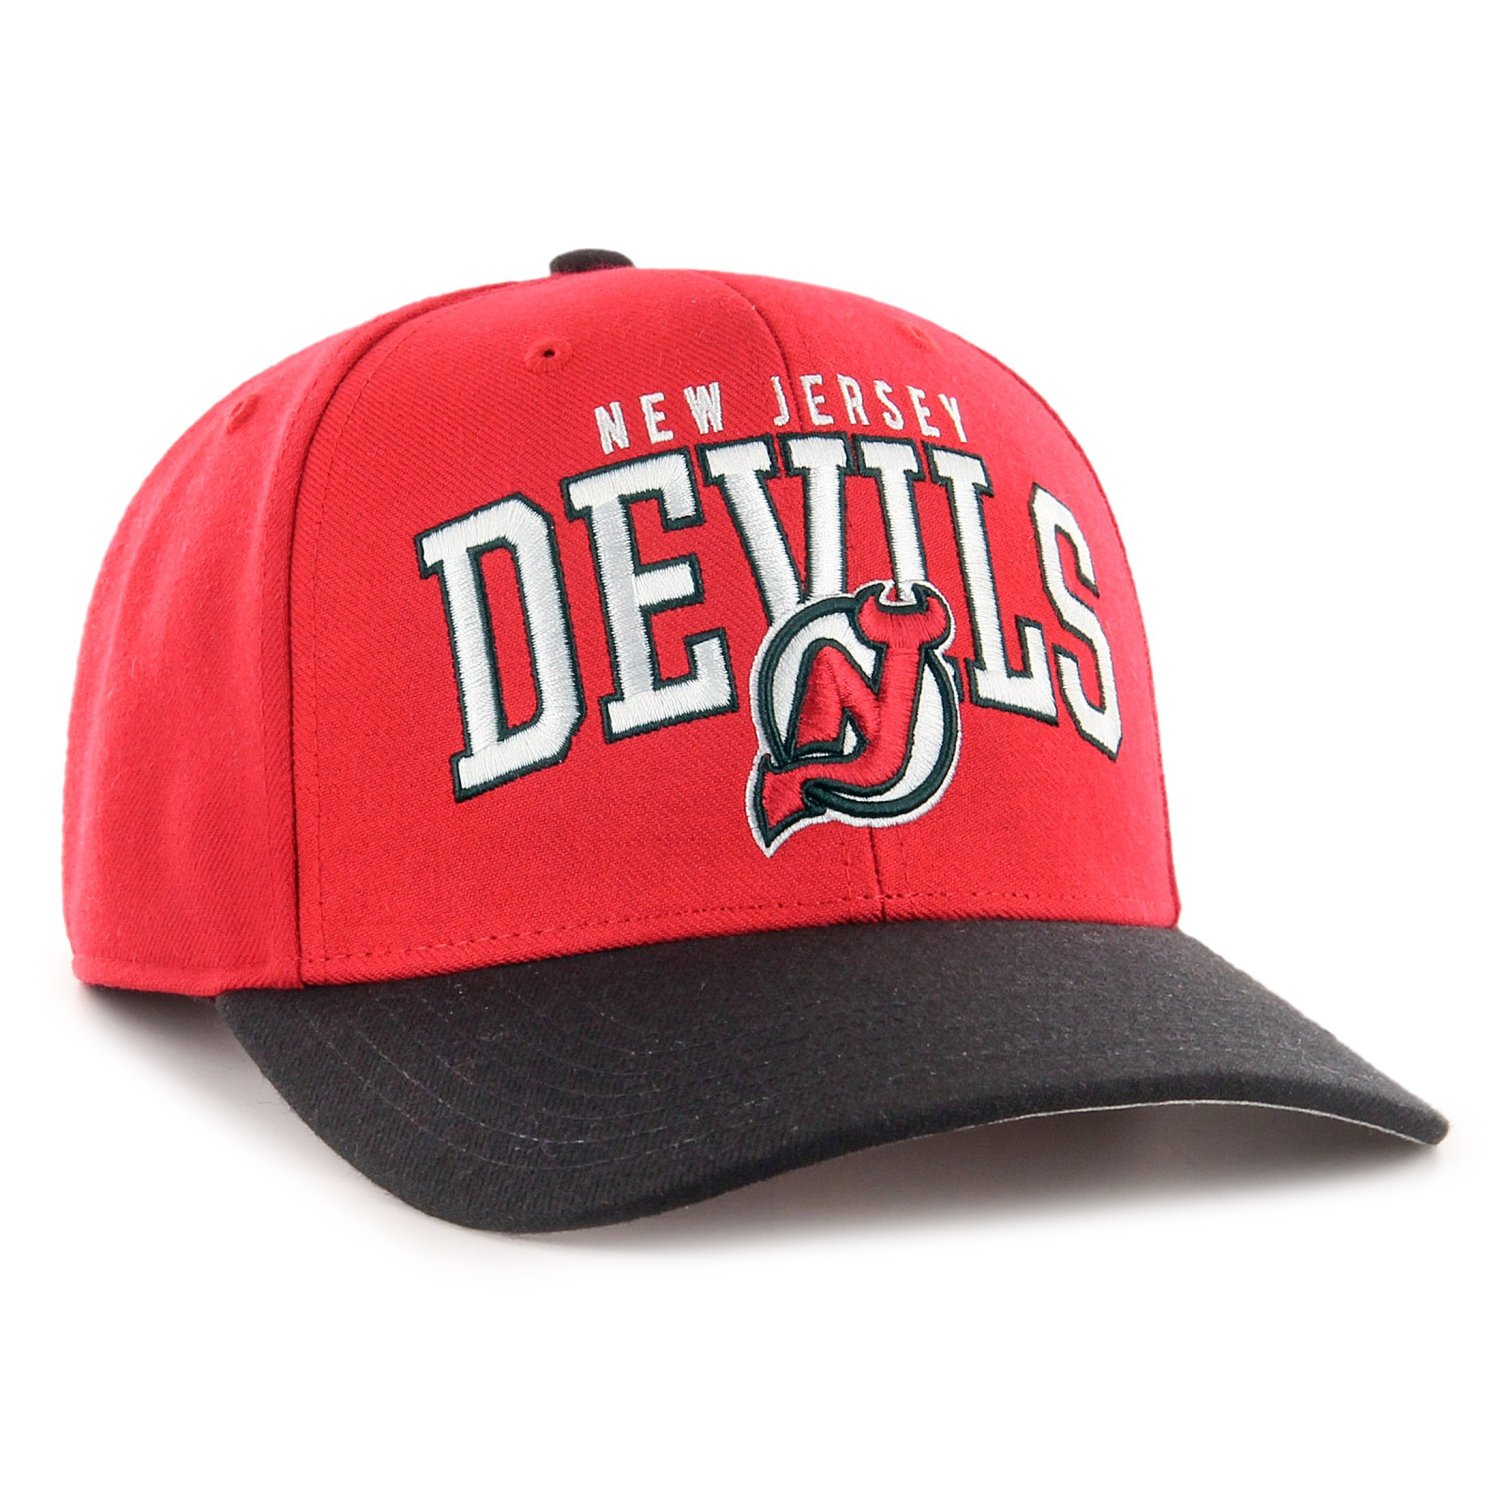 McCaw New Jersey Devils 47 Brand Low Profile Snapback Cap 